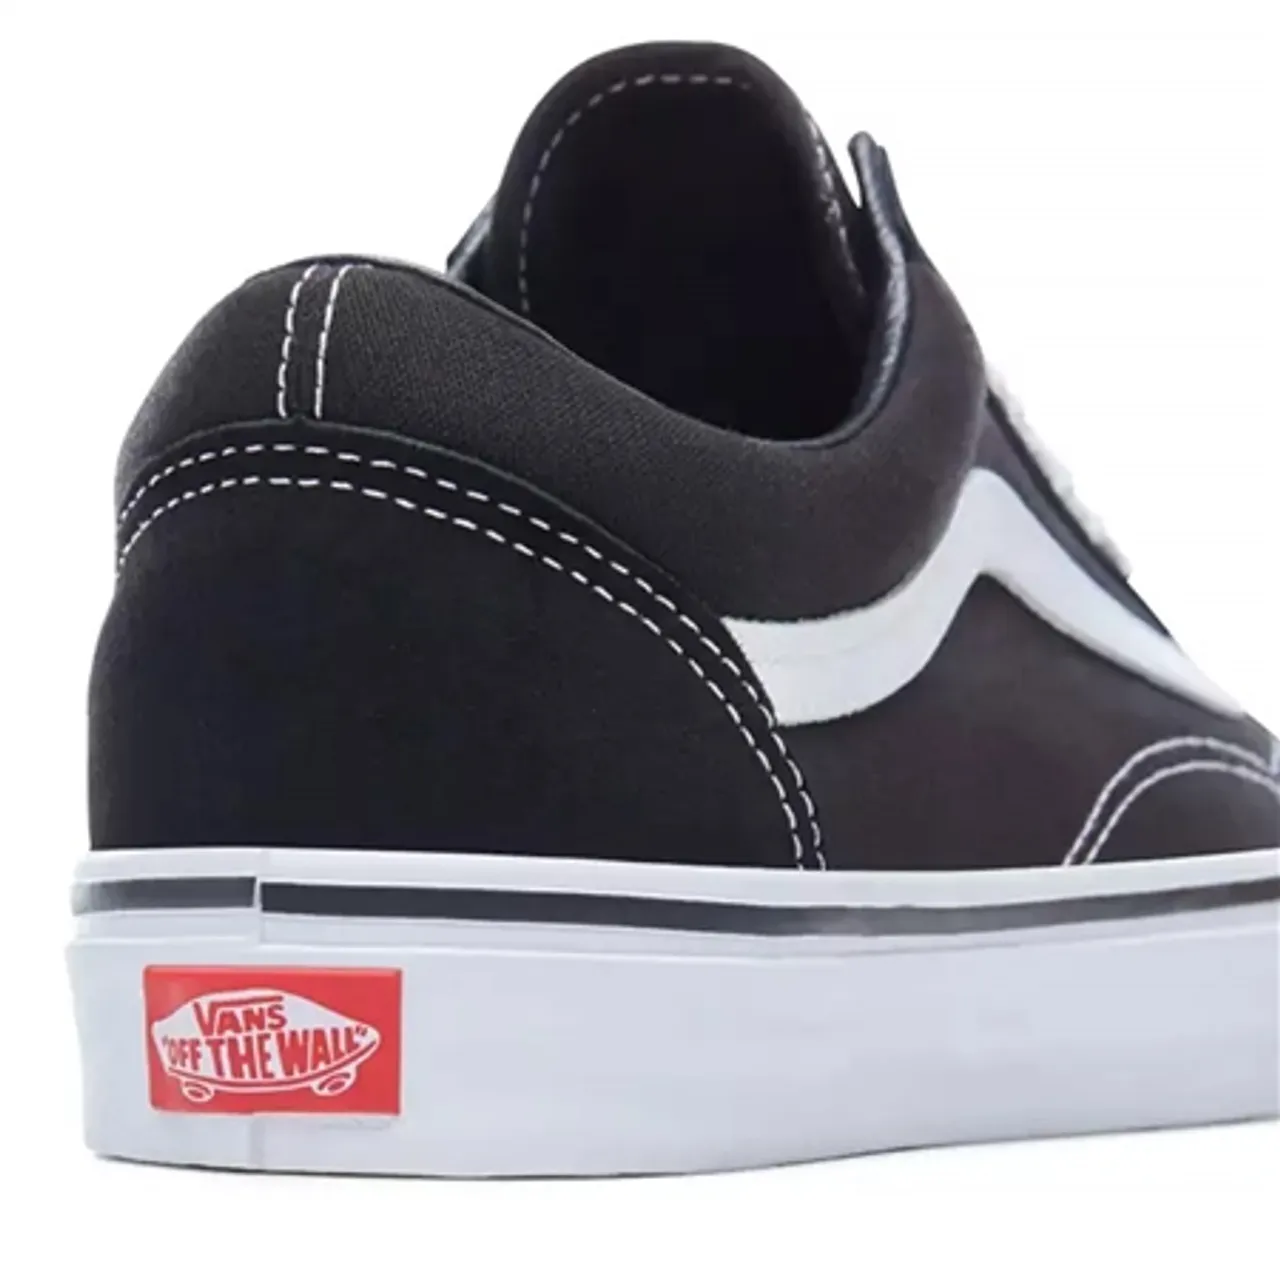 Vans Old Skool Mens Shoes - Black & White - UK 7 (EU 40.5)